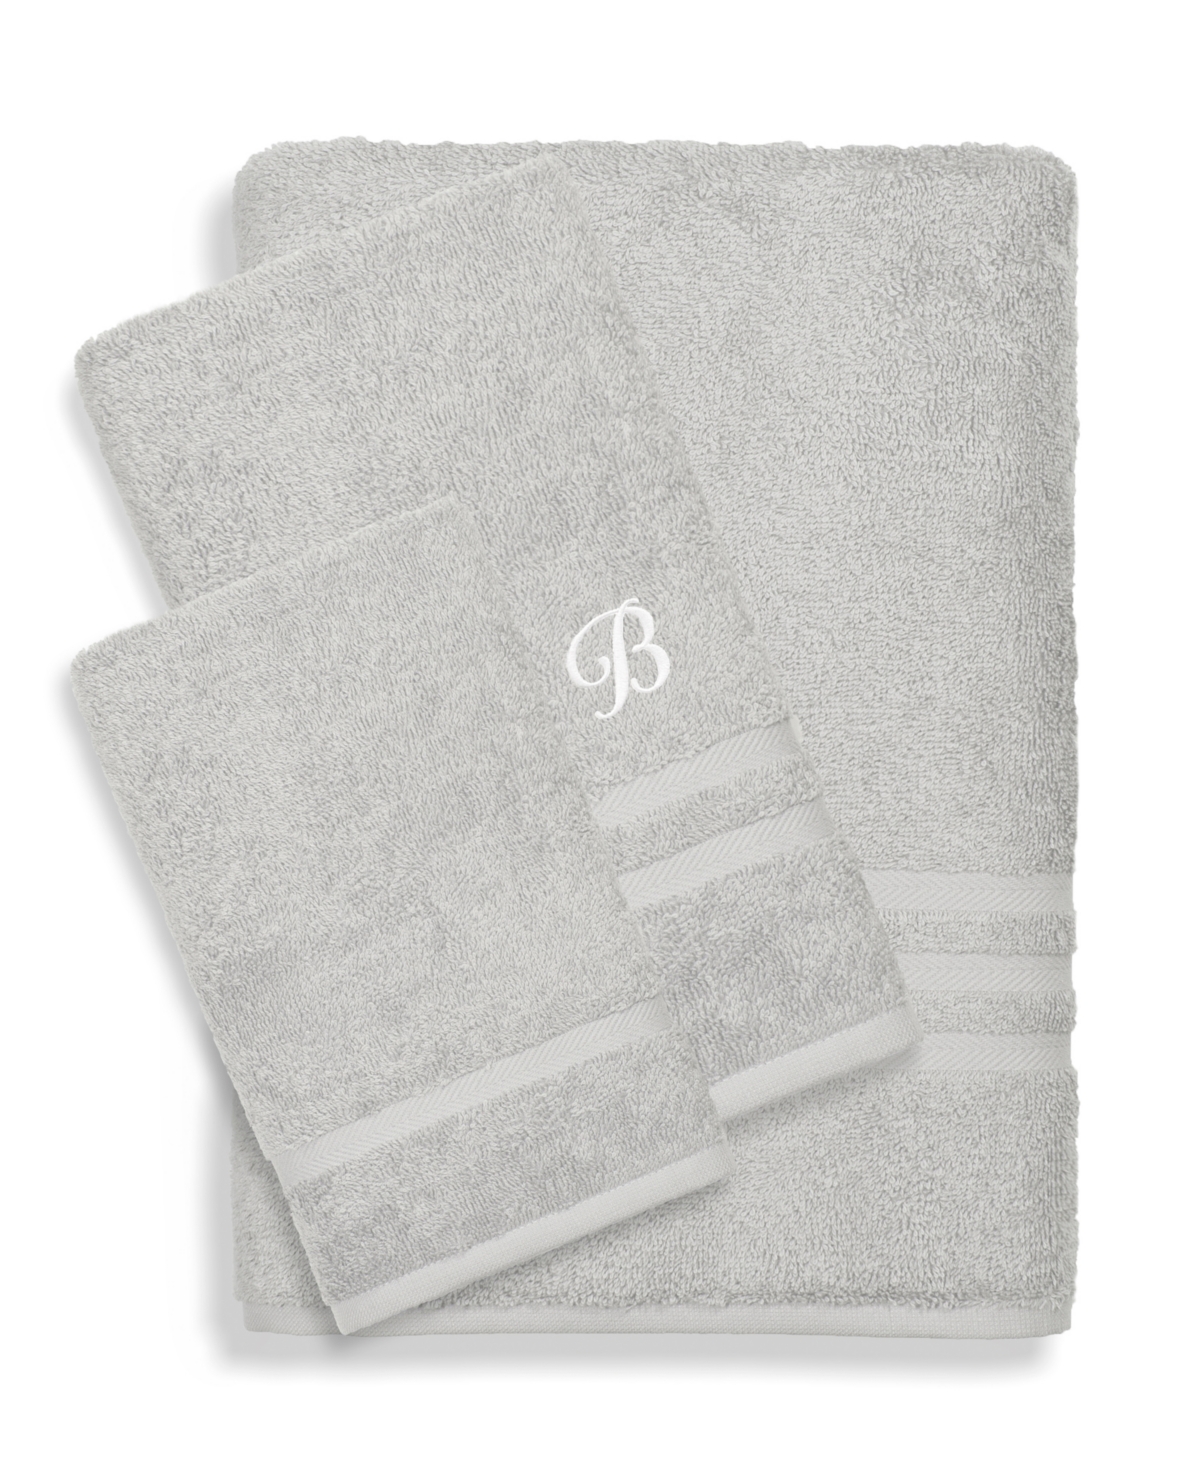 Linum Home Textiles Turkish Cotton Personalized Denzi Towel Set, 3 Piece In Gray